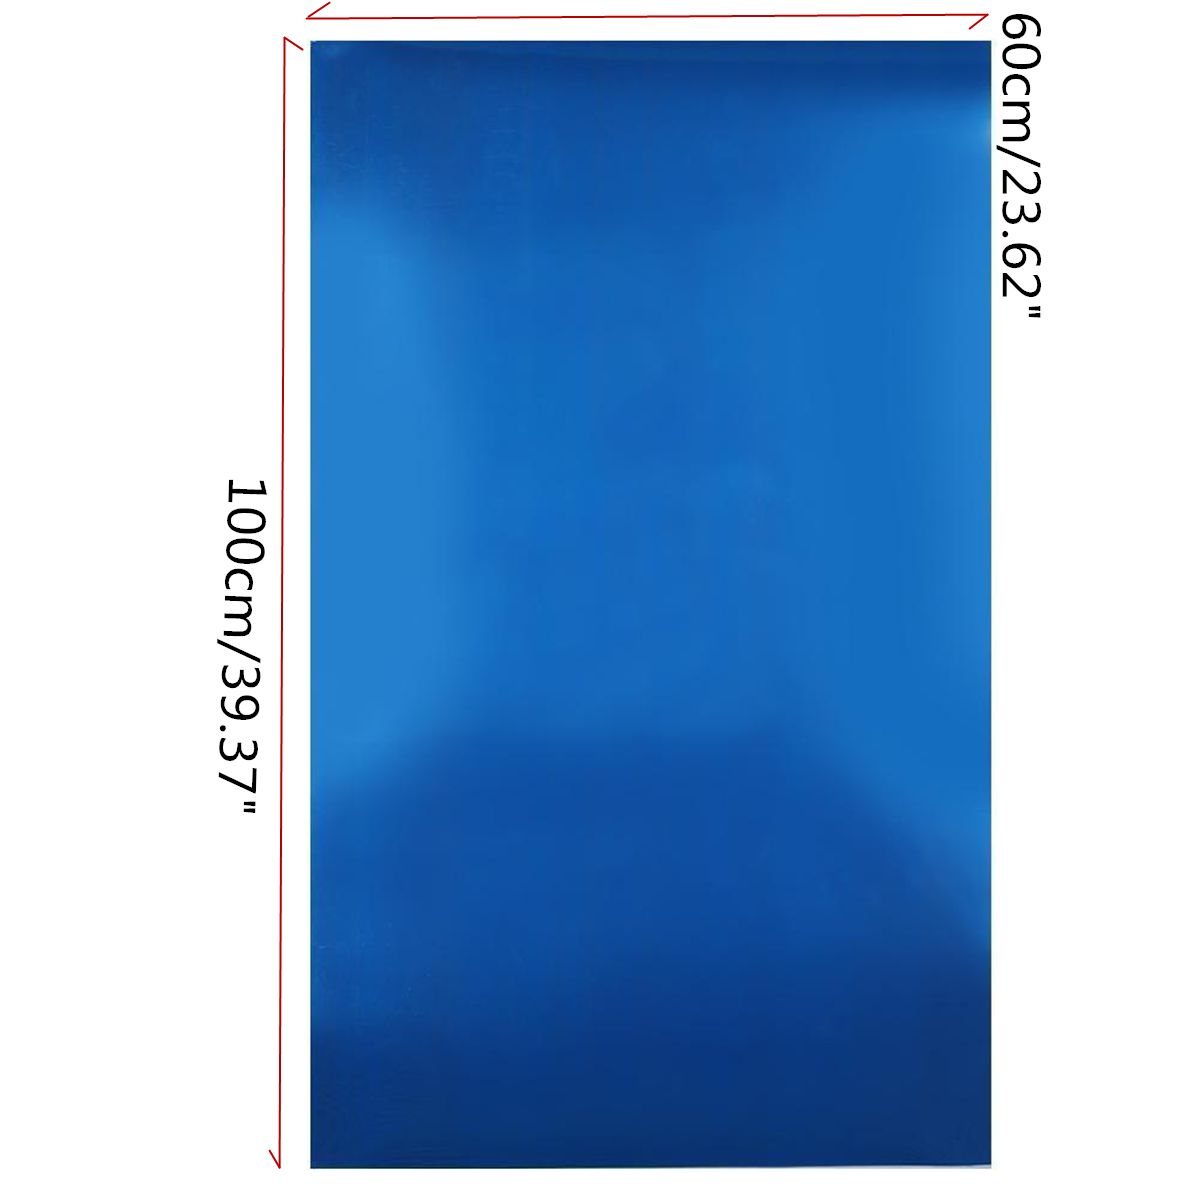 60x100cm-Wall-Foil-Mirror-Decorative-Self-adhesive-Wall-Sticker-Wall-Decal-Home-Decor-1355324